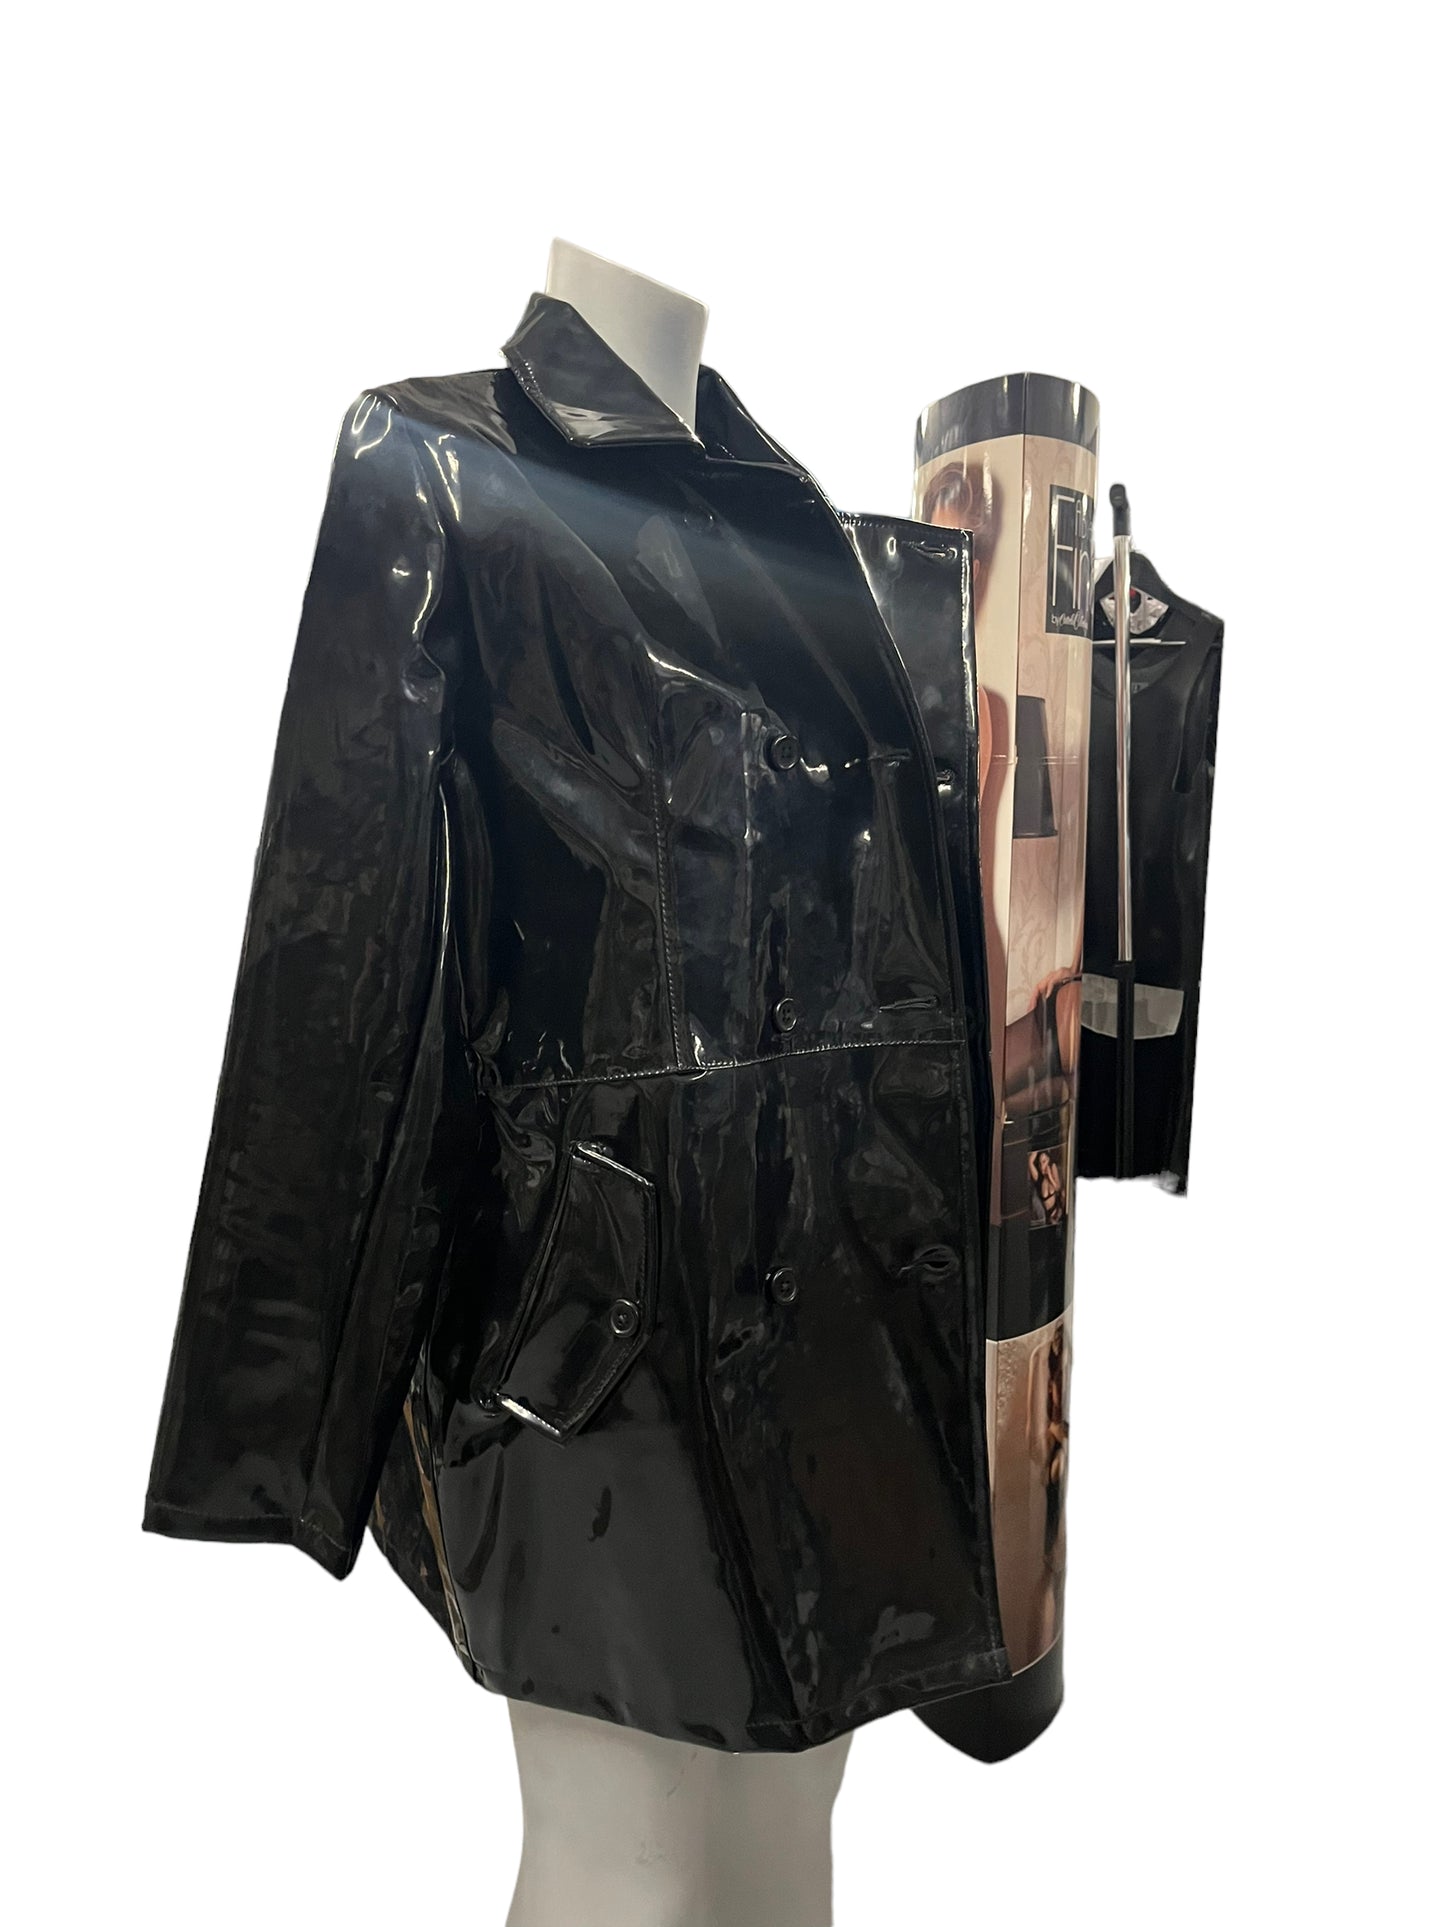 Fashion World - LL60 - Black Leather Jacket - Size XL